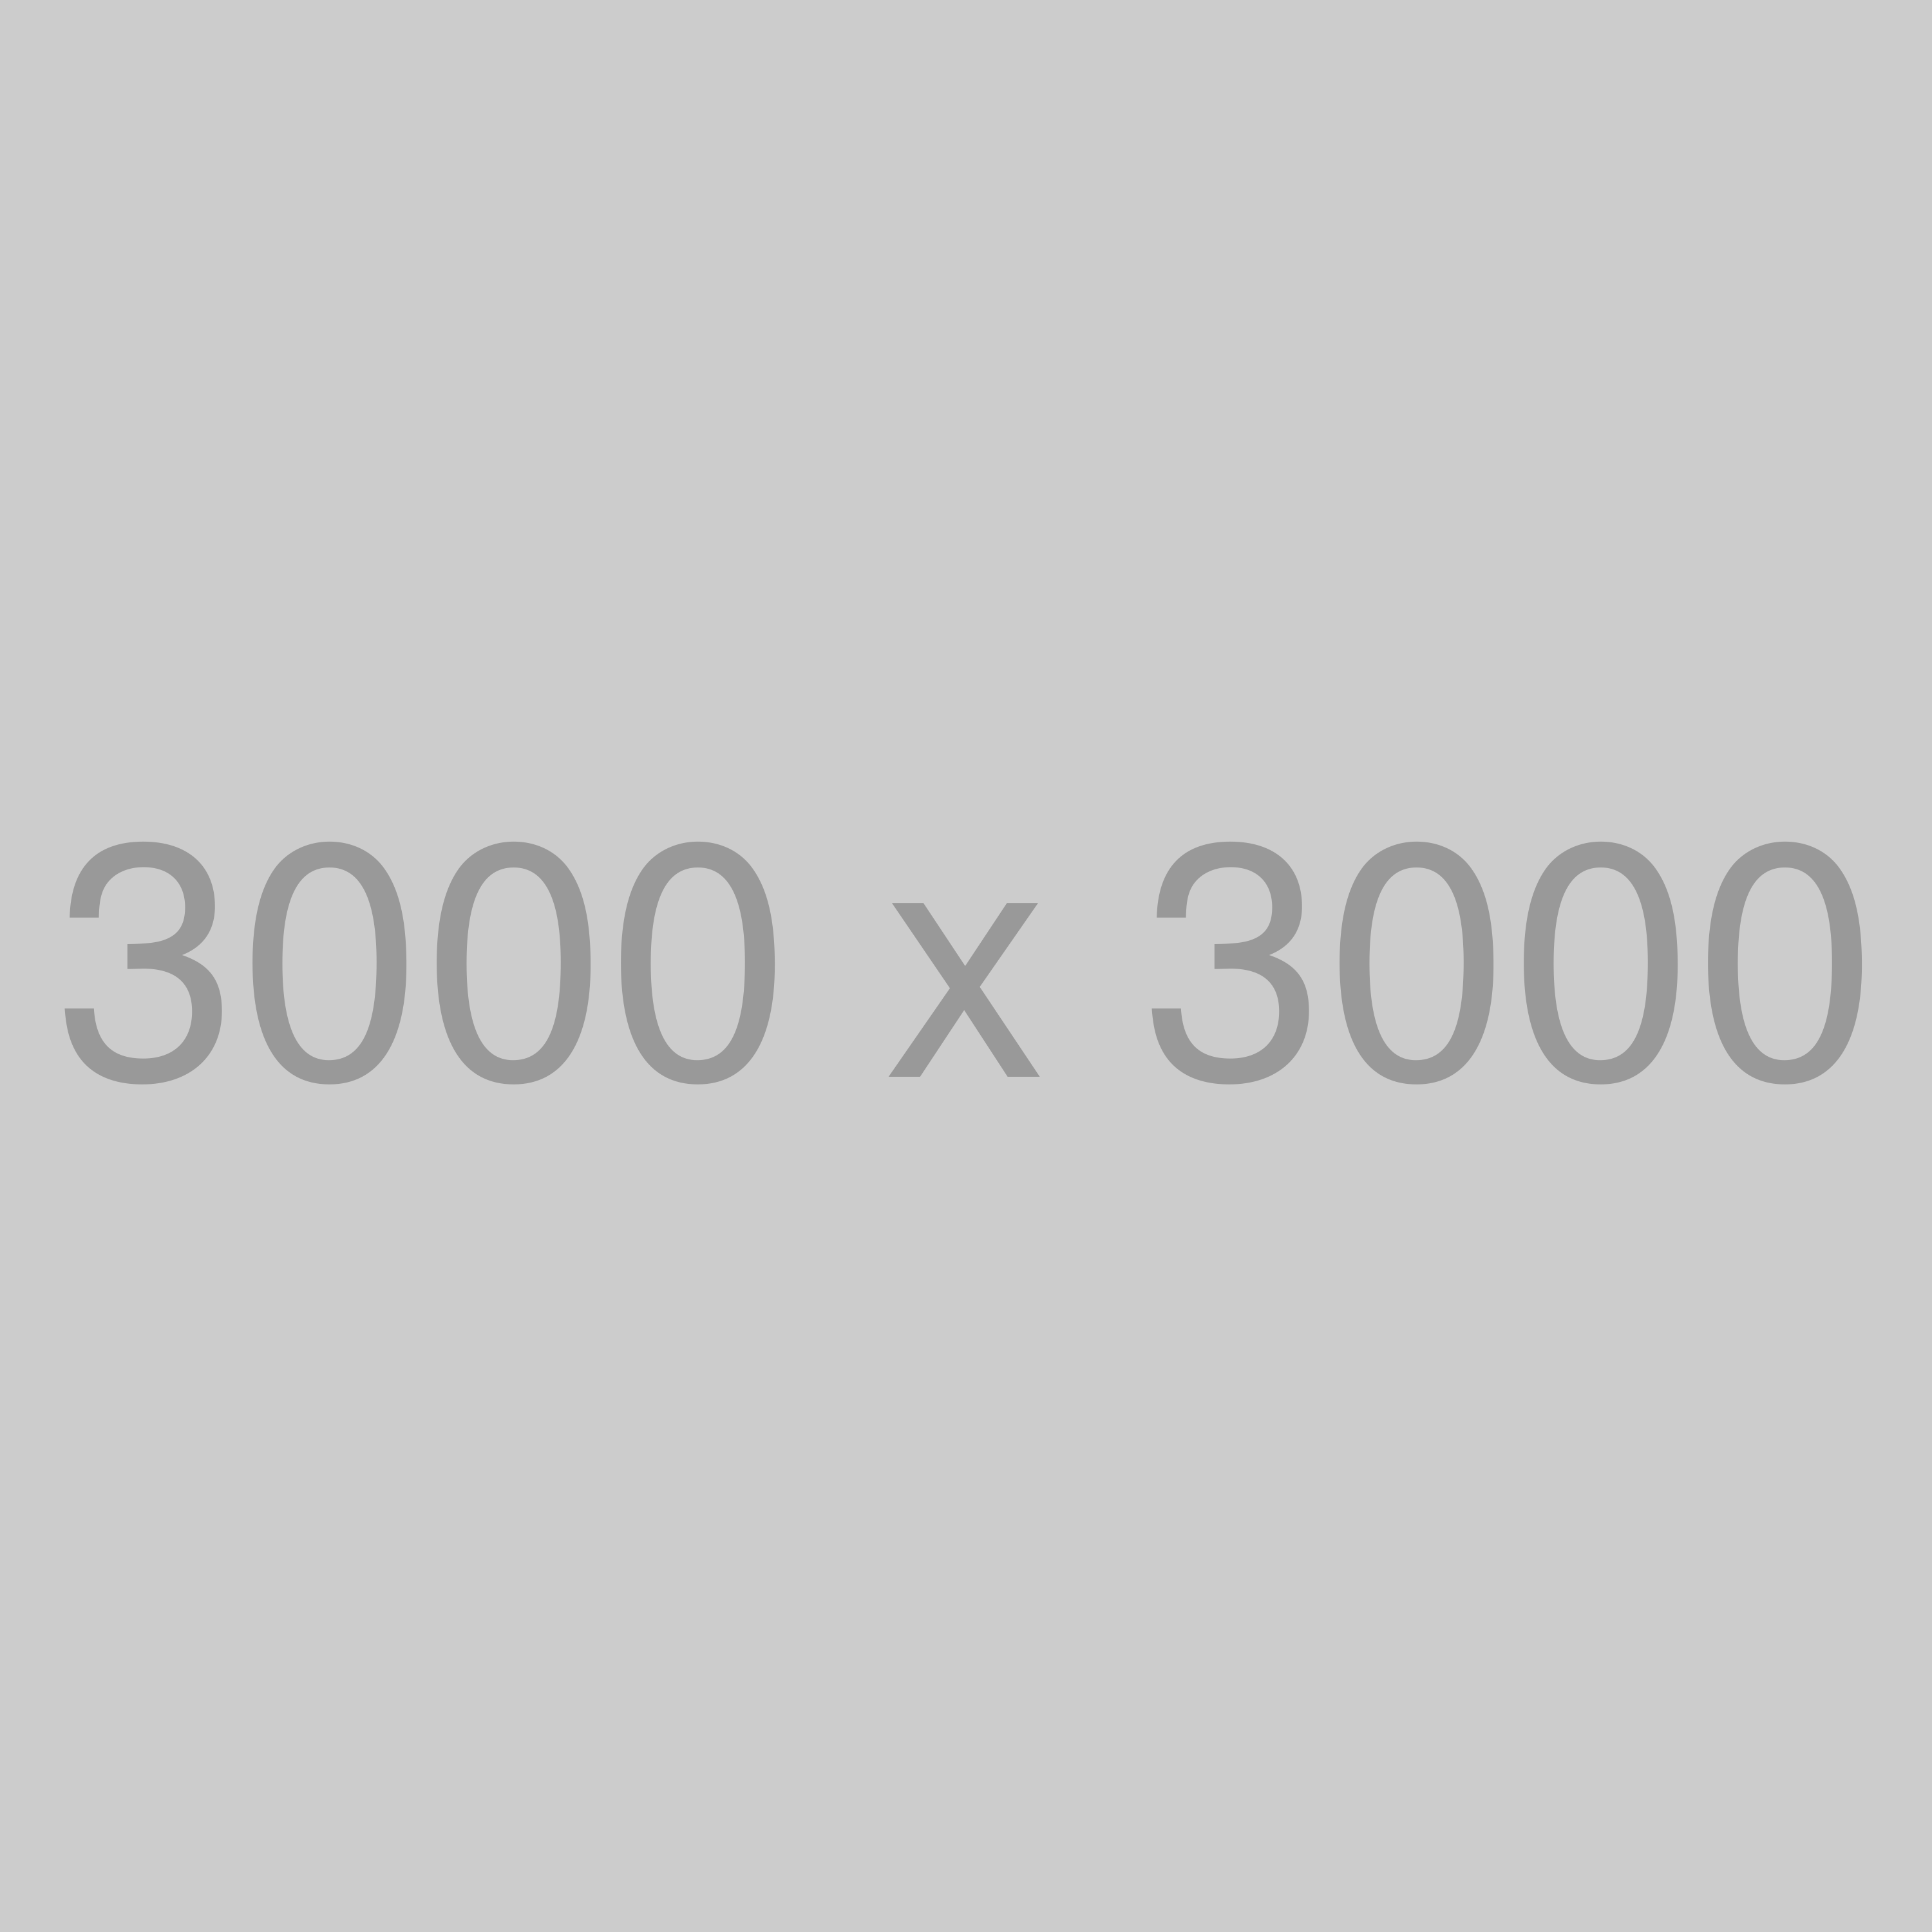 test/3000x3000 ギャラリー写真